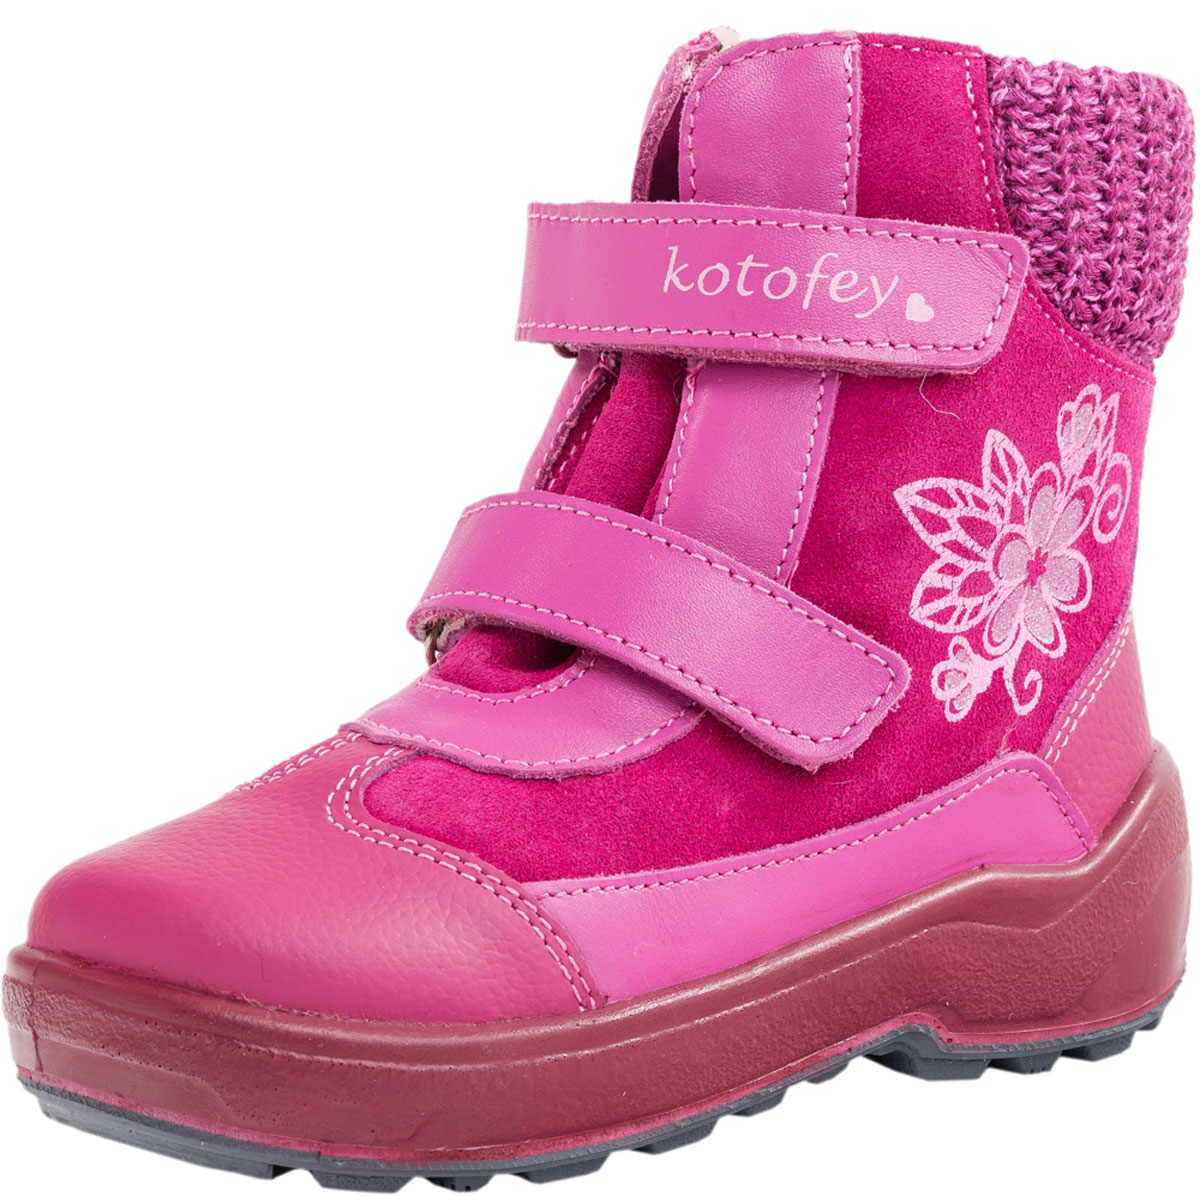 Ботинки для девочки Котофей, цвет: фуксия. 252114-42. Размер 24